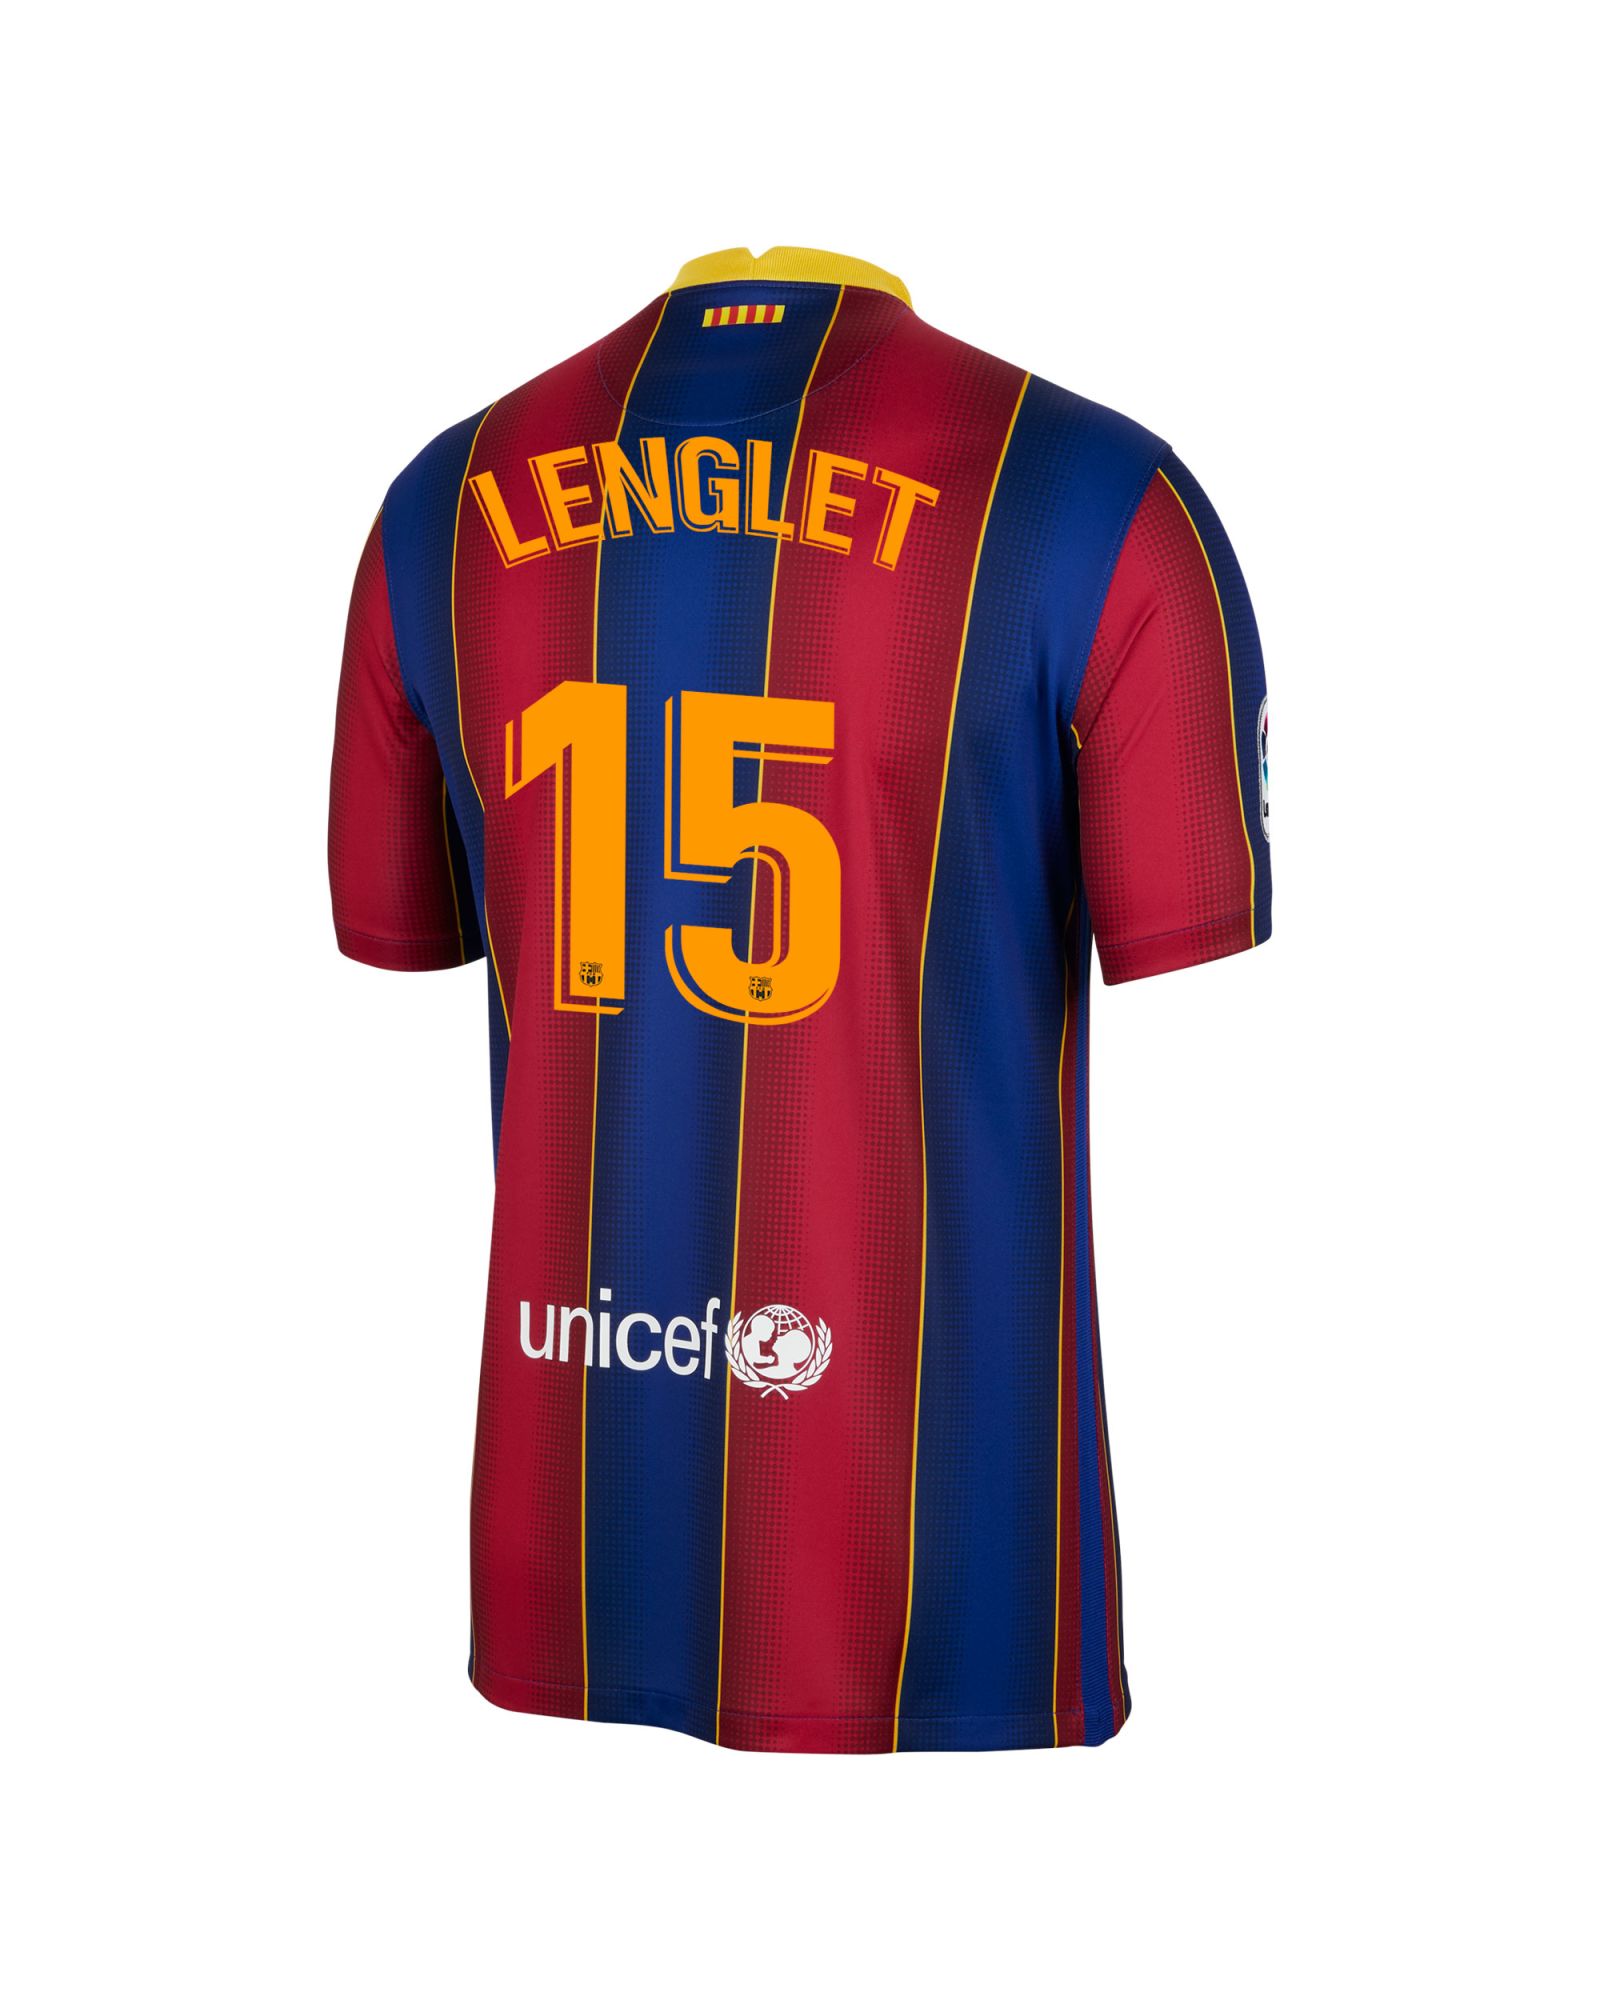 Camiseta 1ª FC Barcelona 2020/2021  Lenglet - Fútbol Factory